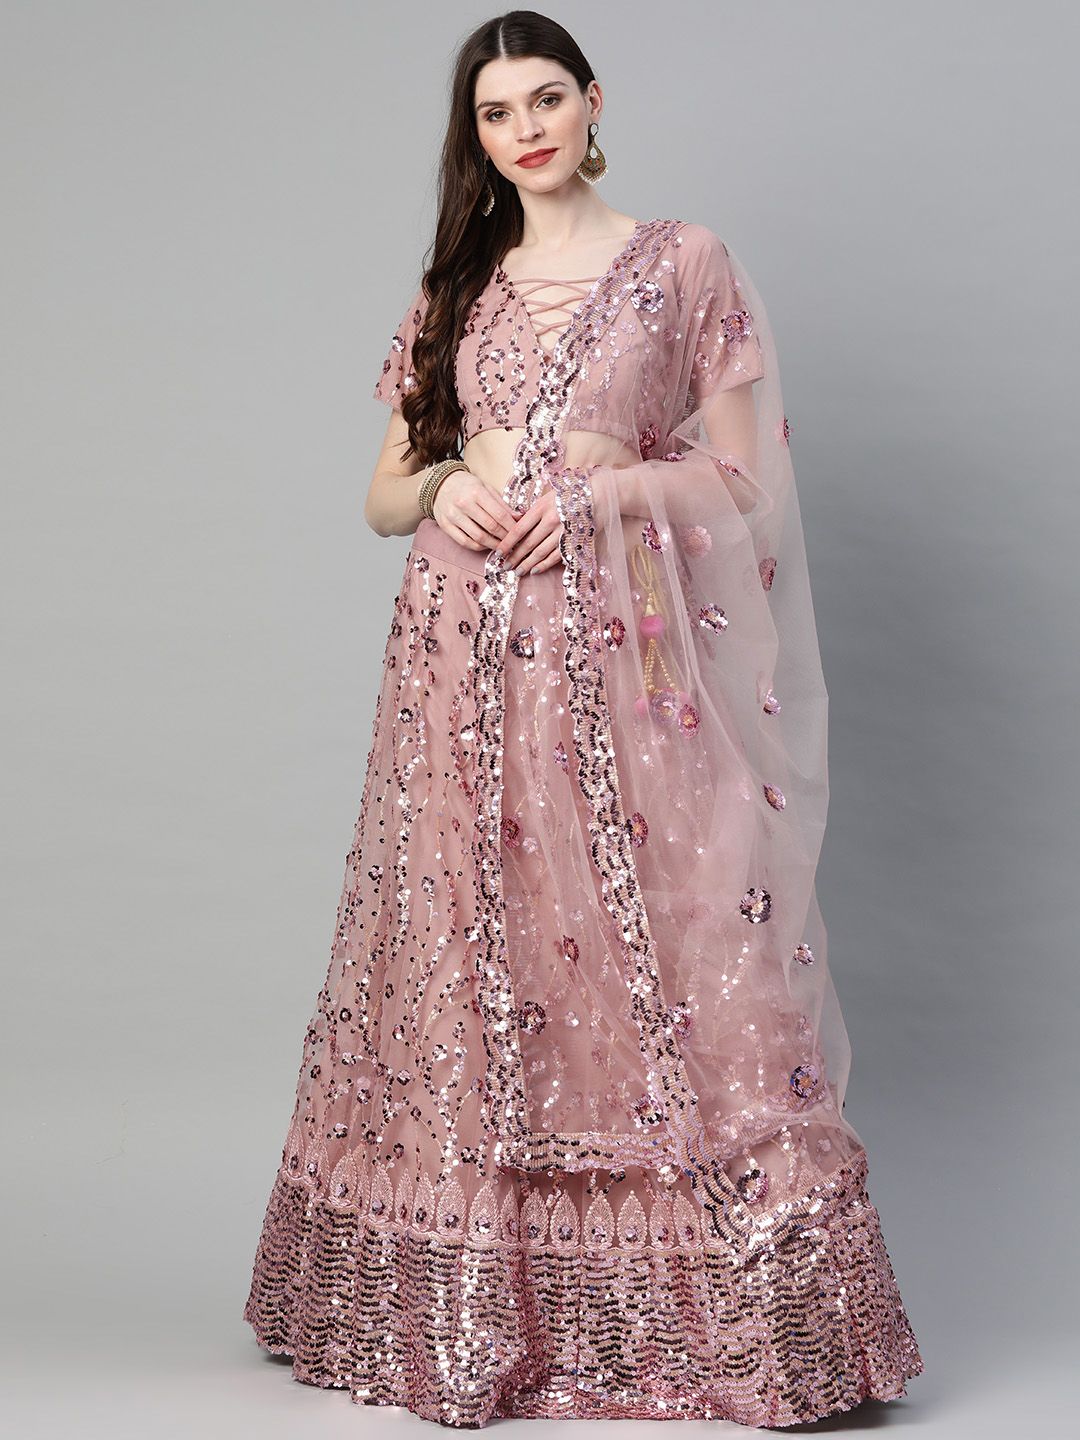 Readiprint Fashions Mauve Embellished Semi-Stitched Lehenga & Blouse with Dupatta Price in India